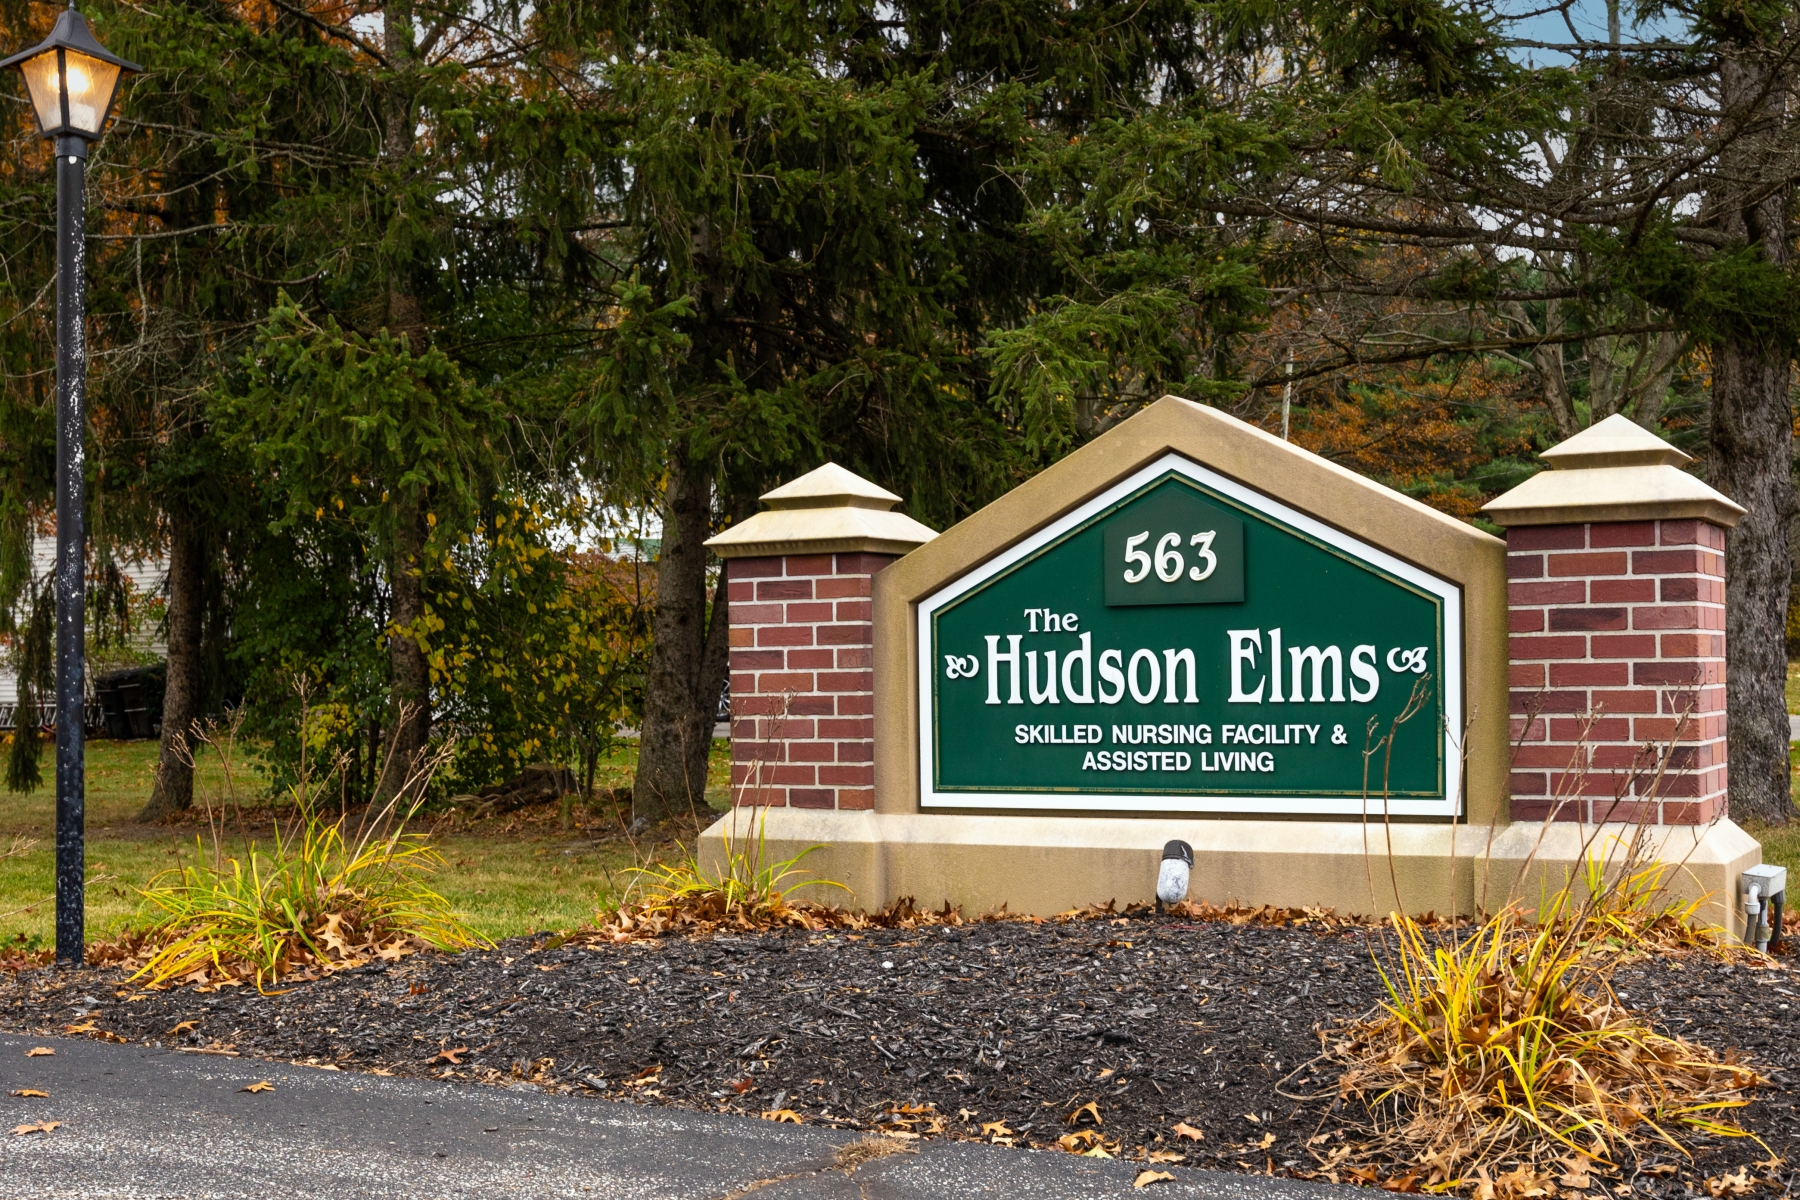 Hudson Elms welcome sign